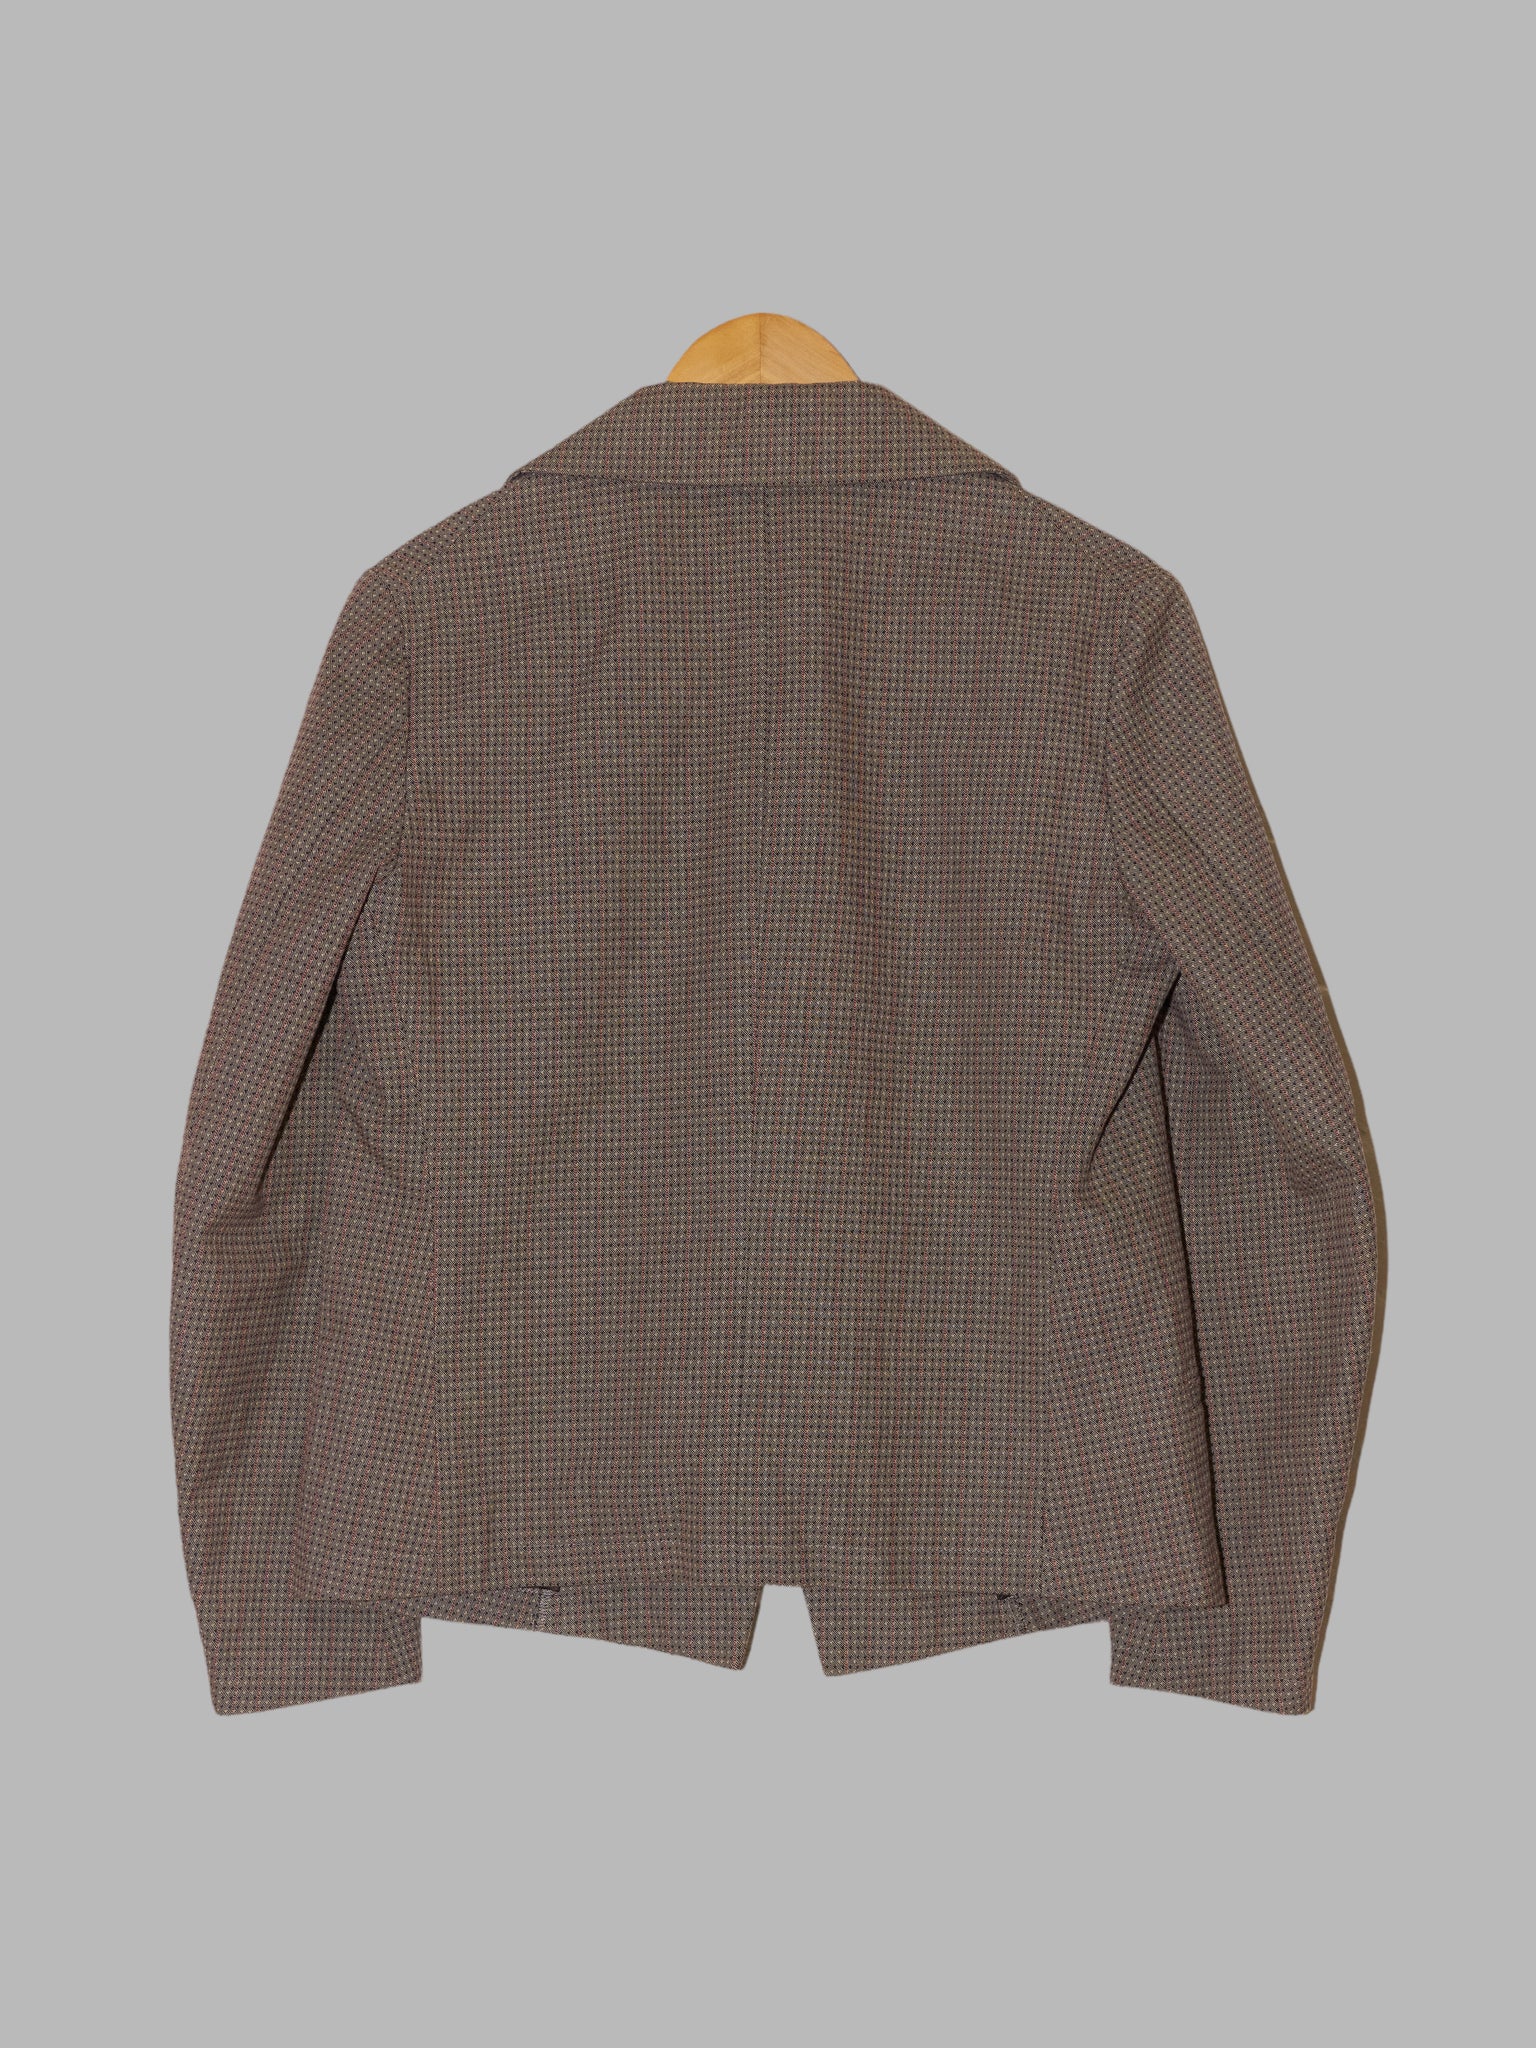 Limi Feu brown cotton patterned three button blazer - S